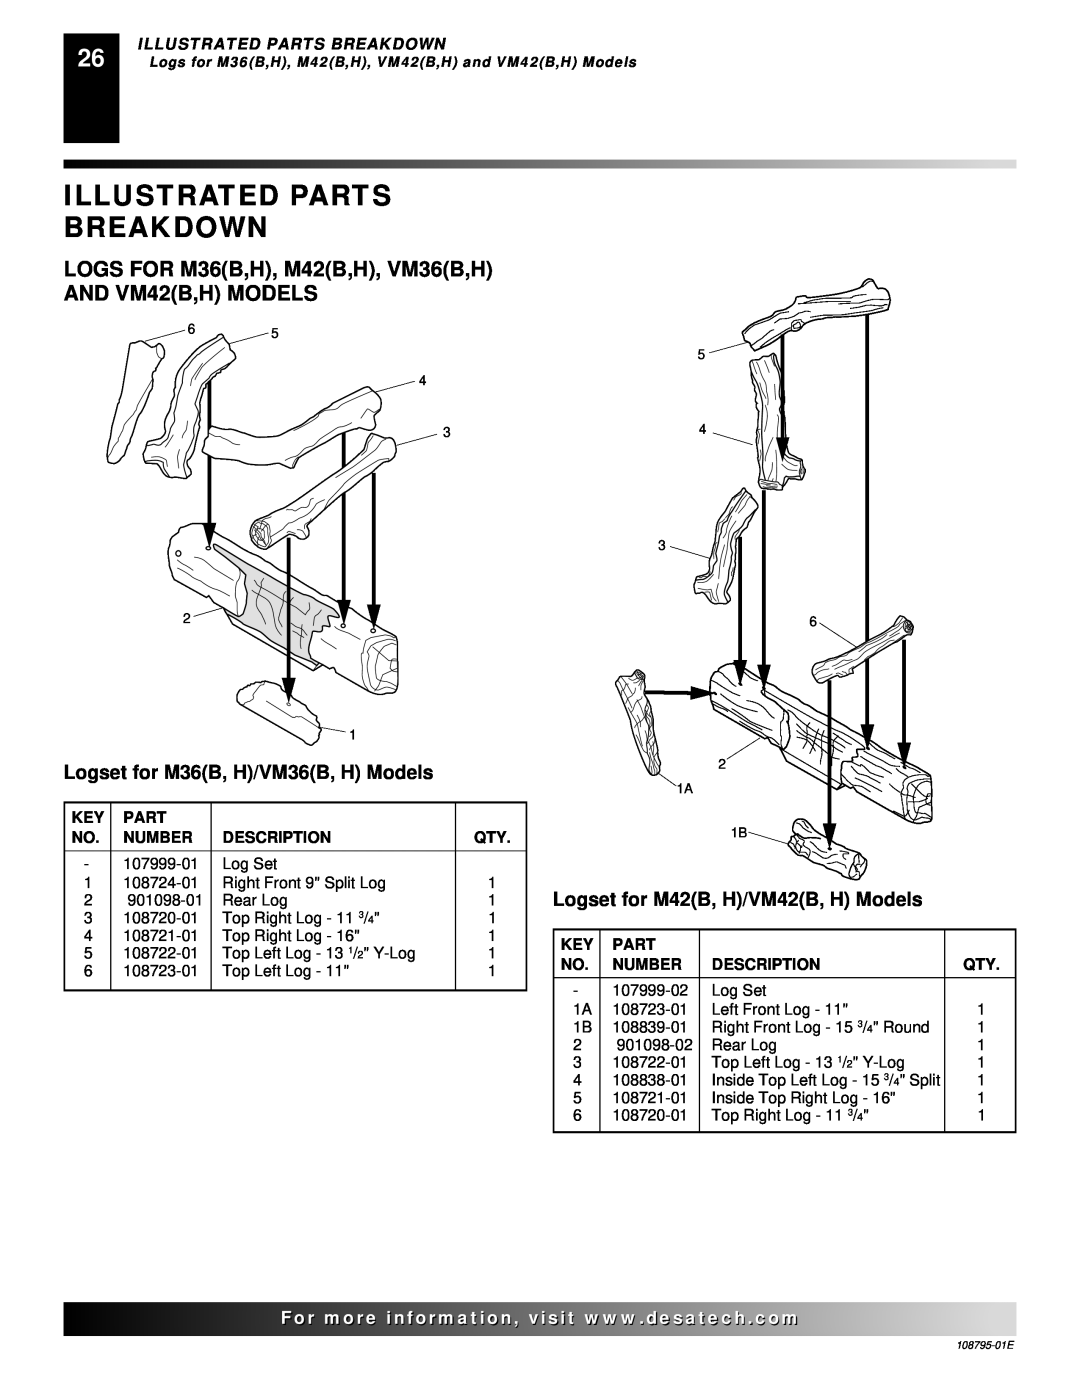 Desa M36, VM42 installation manual Illustrated Parts Breakdown, Number, Description 